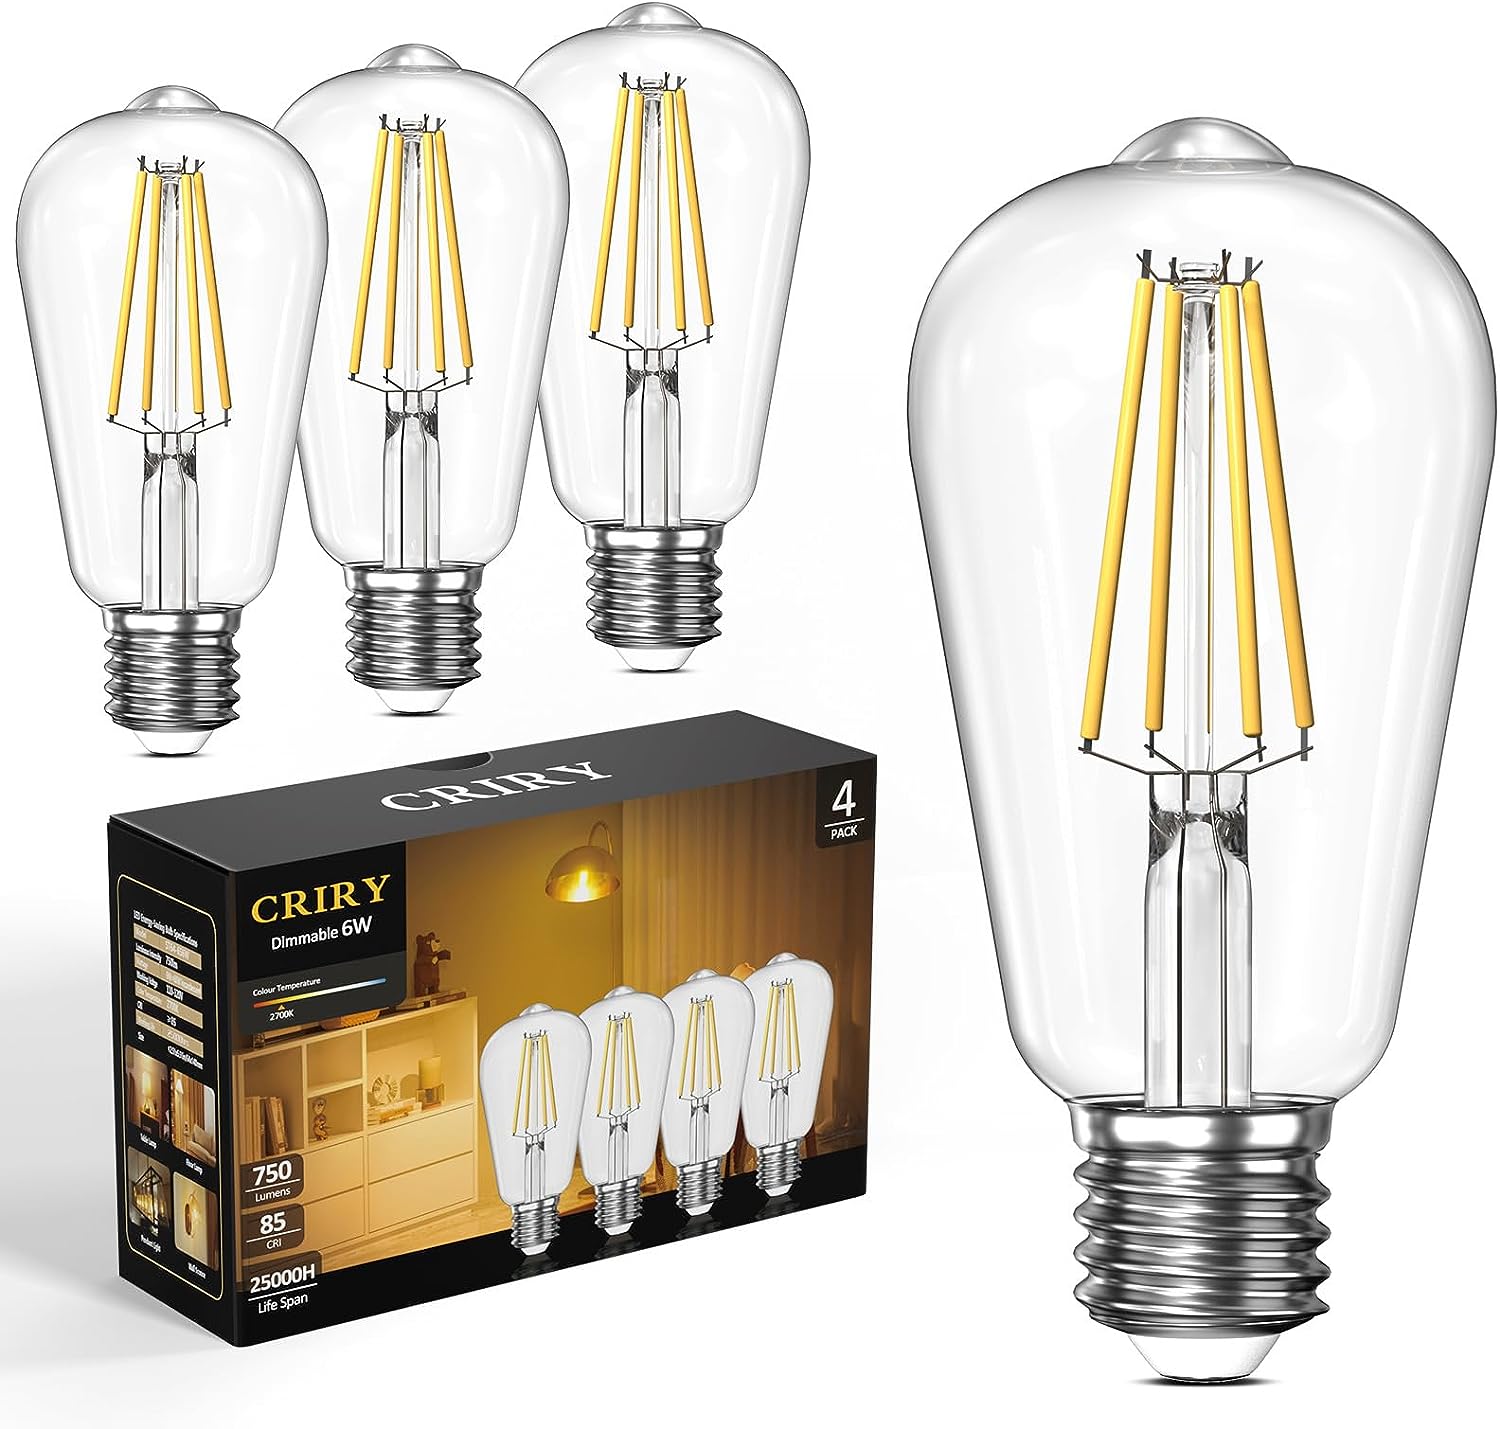 CRIRY Dimmable LED Edison Bulbs 60W Equivalent, E26 [...]